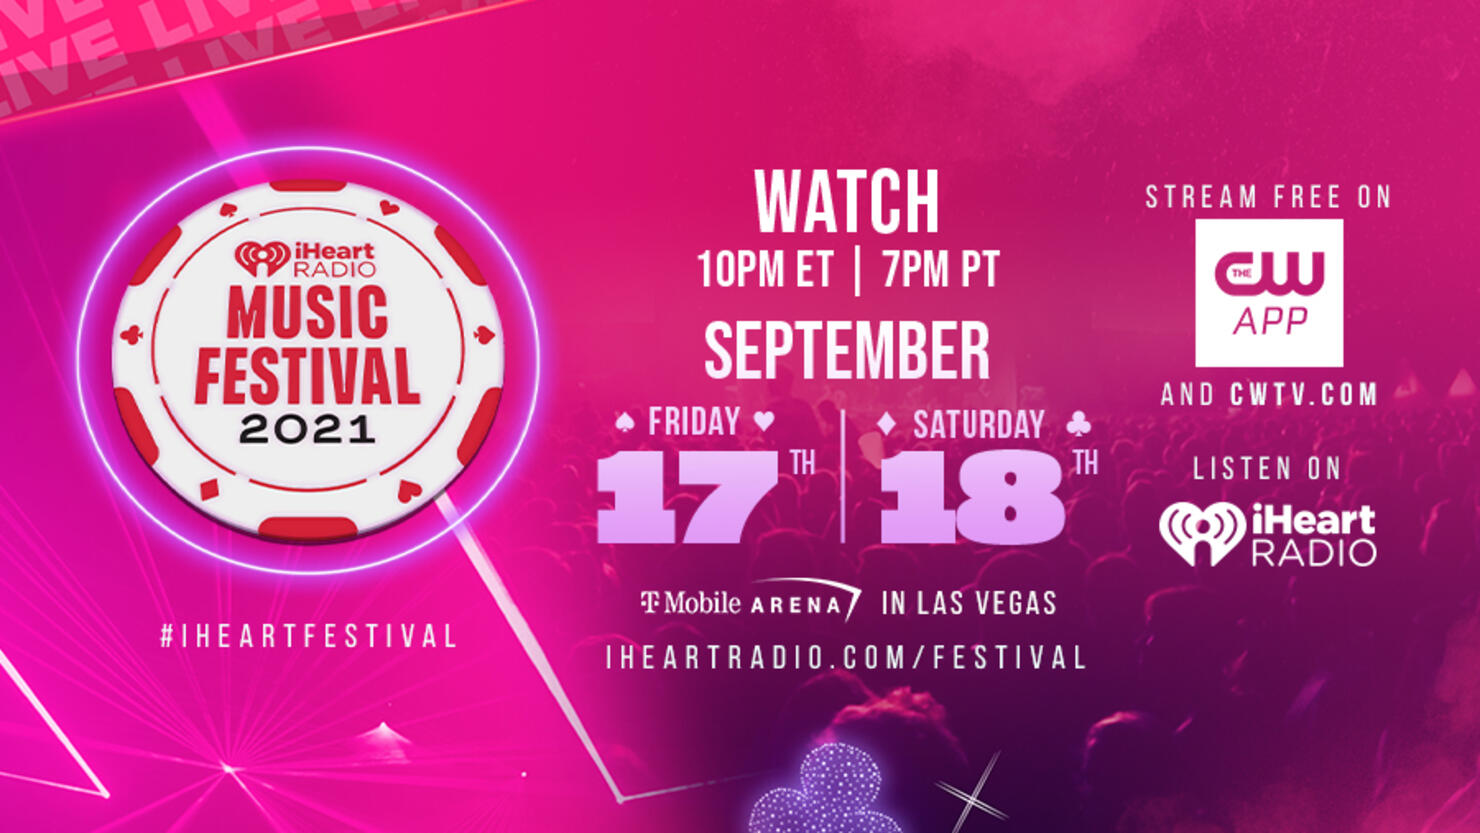 Las Vegas' Area15 hosts this year's iHeartRadio Music Festival